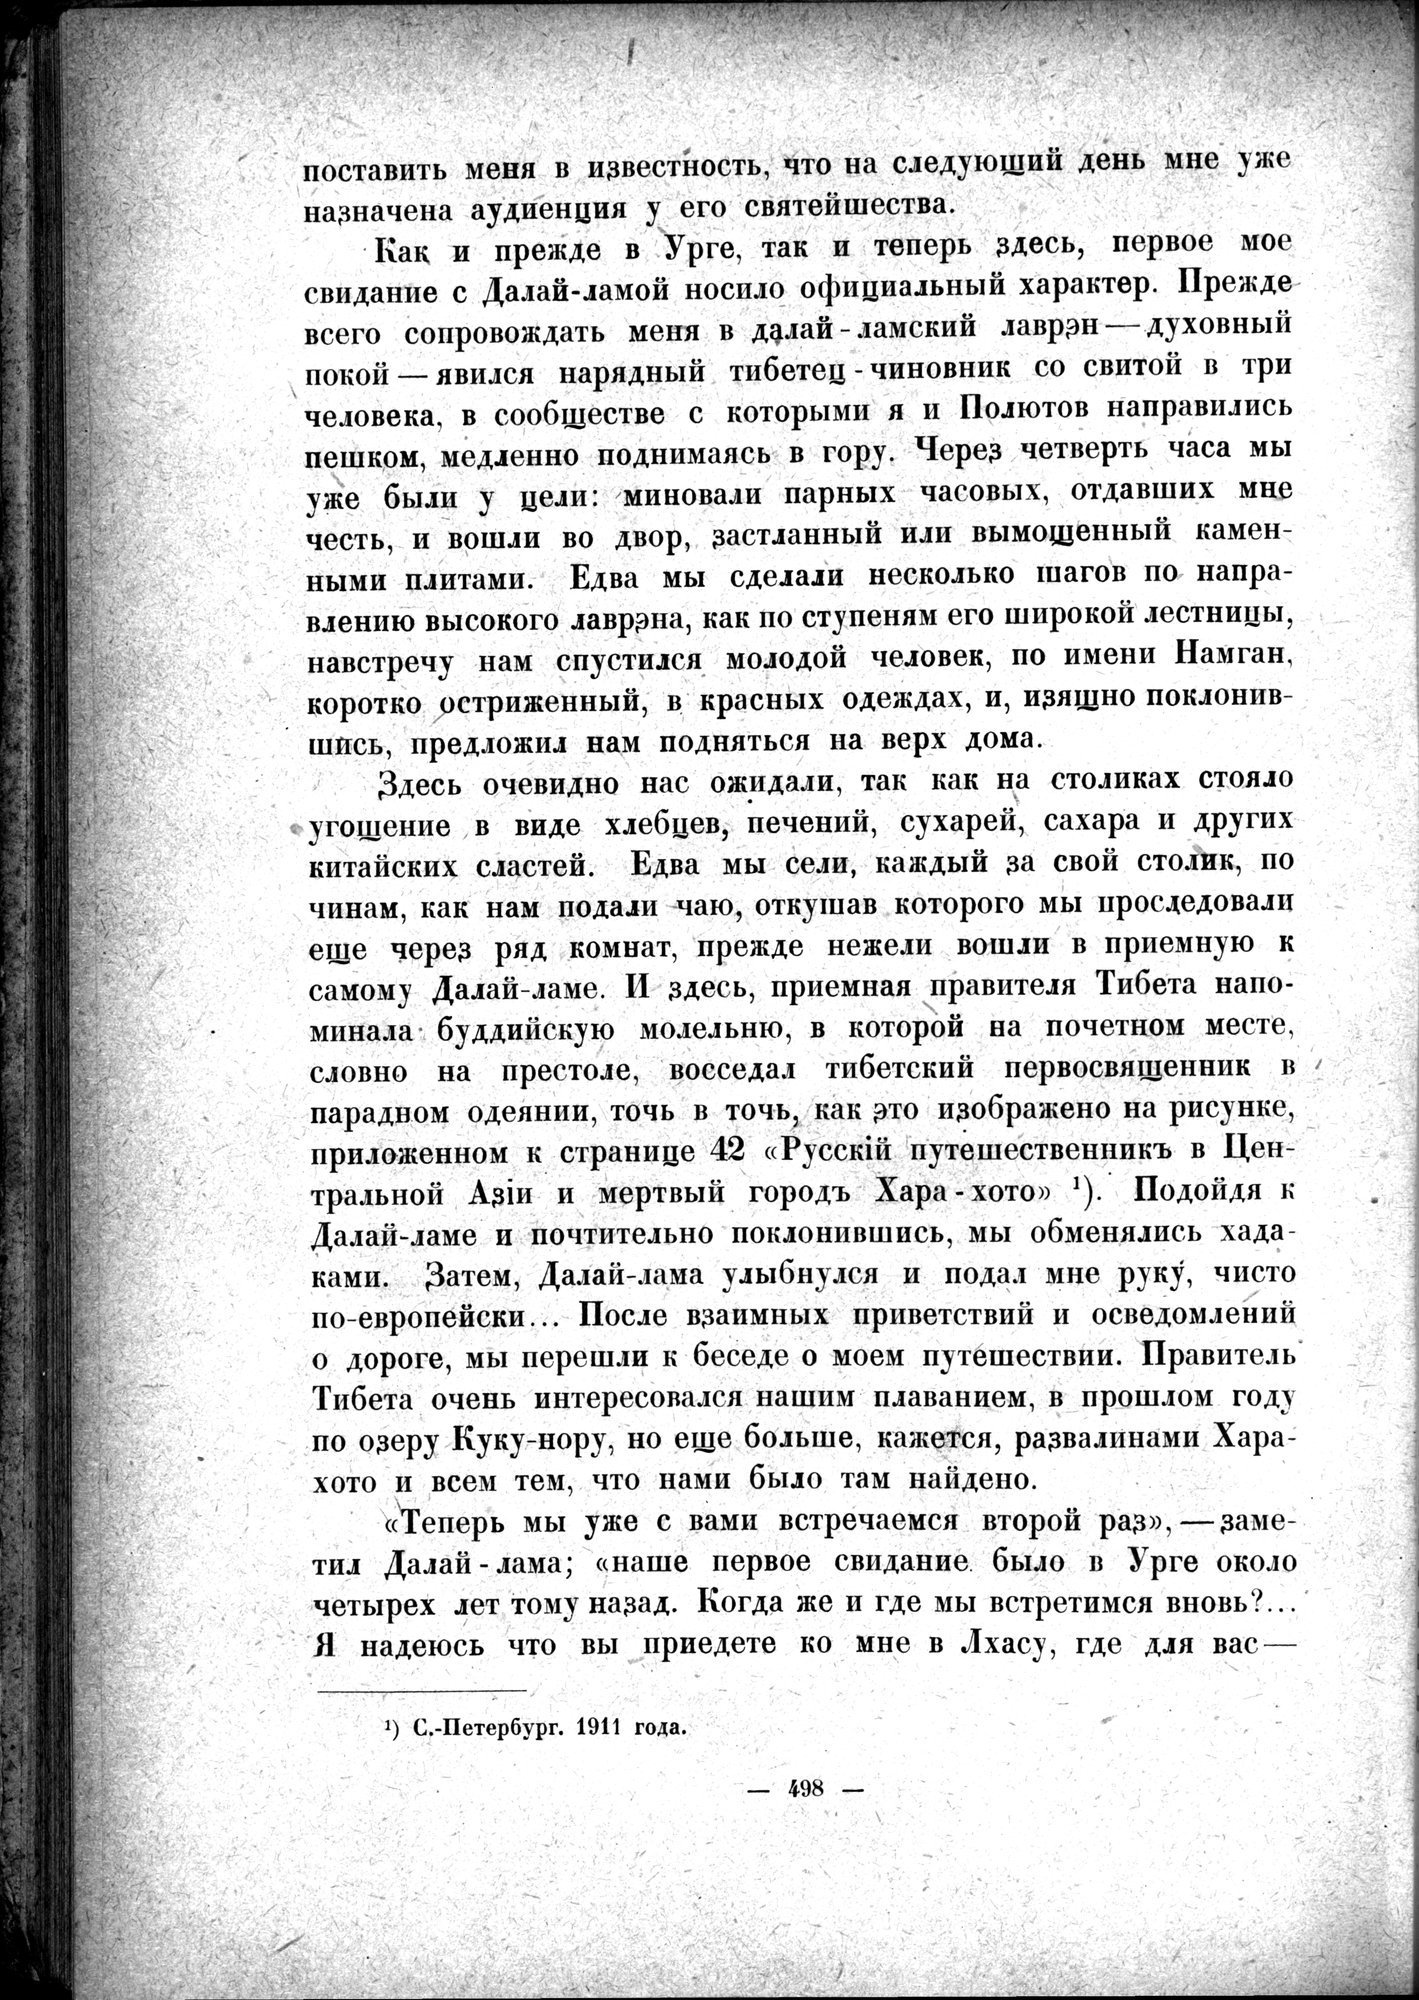 Mongoliya i Amdo i mertby gorod Khara-Khoto : vol.1 / Page 570 (Grayscale High Resolution Image)